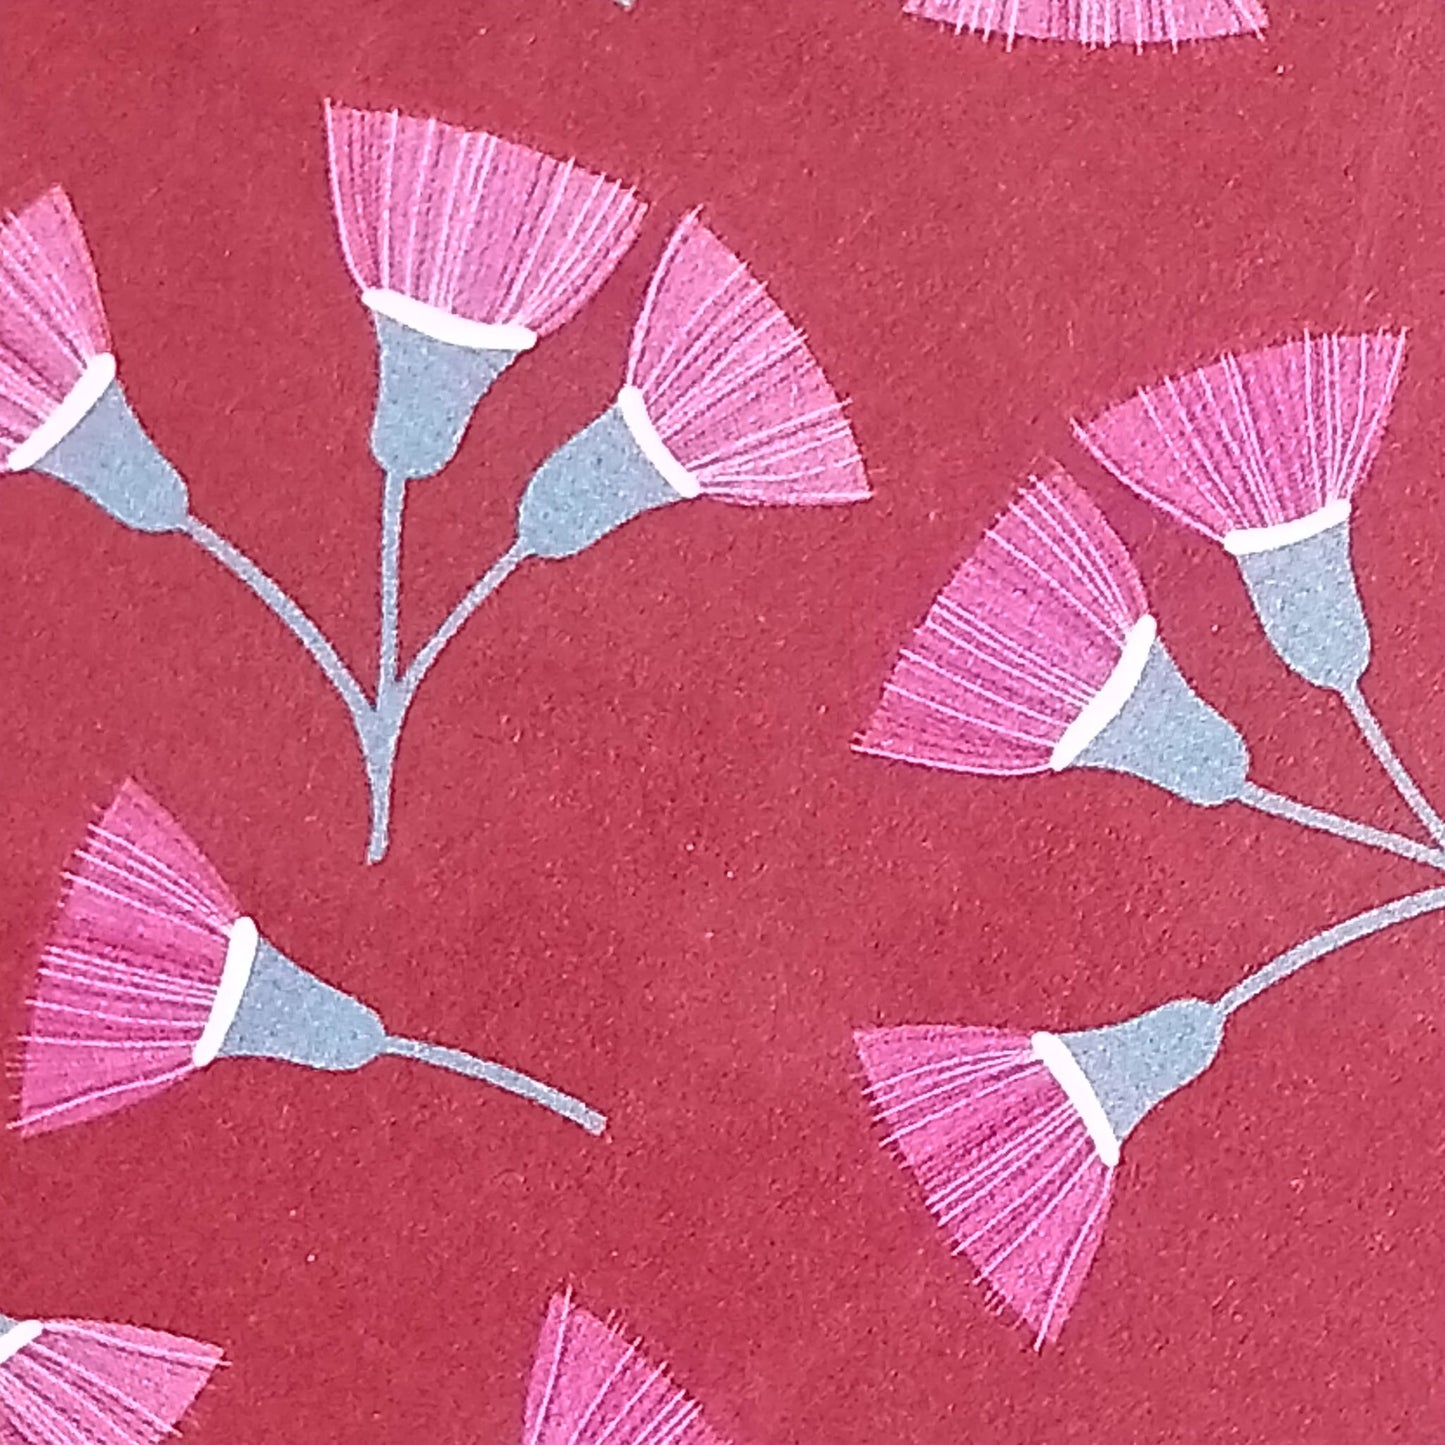 Wilddori 40 sheet Blank Insert - Red Gum Blossom